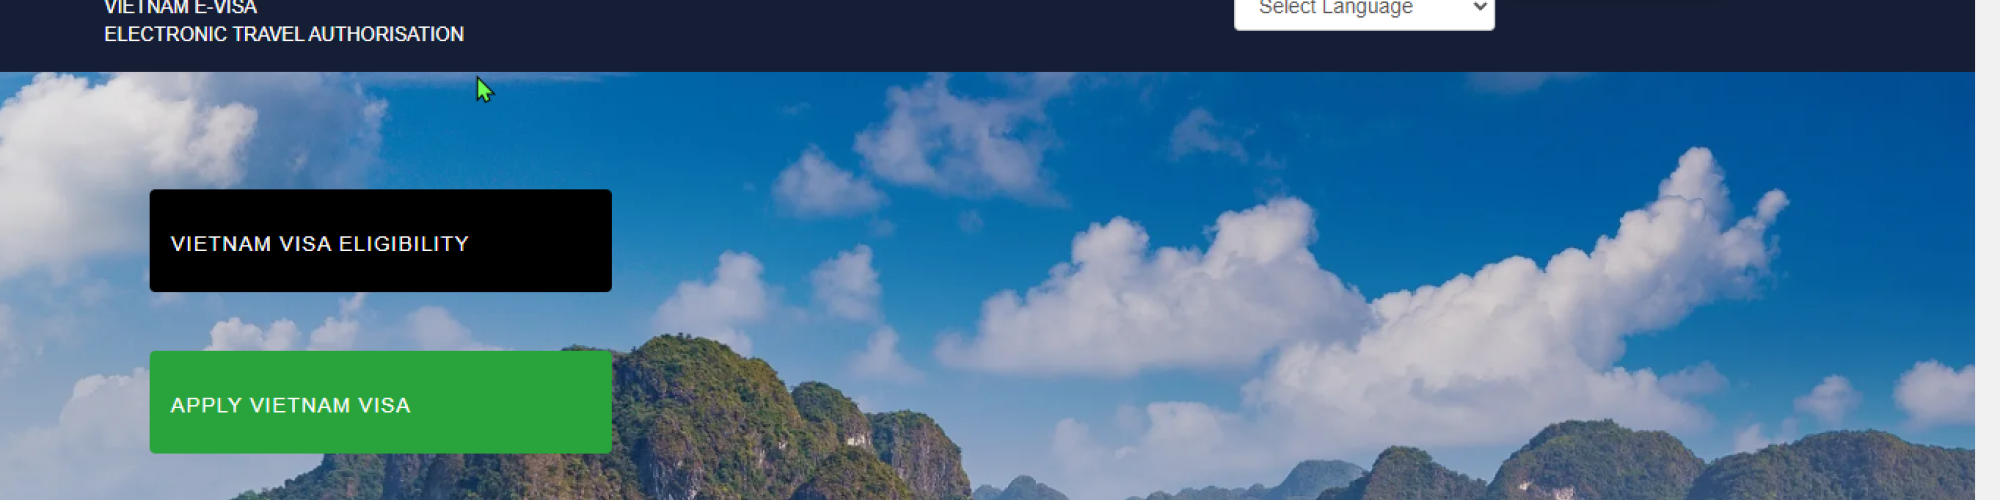 VIETNAMESE  Official Vietnam Government Immigration Visa Application Online  FOR THAILAND CITIZENS - ศูนย์รับคำร้องขอวีซ่าสหรัฐอเมริกา